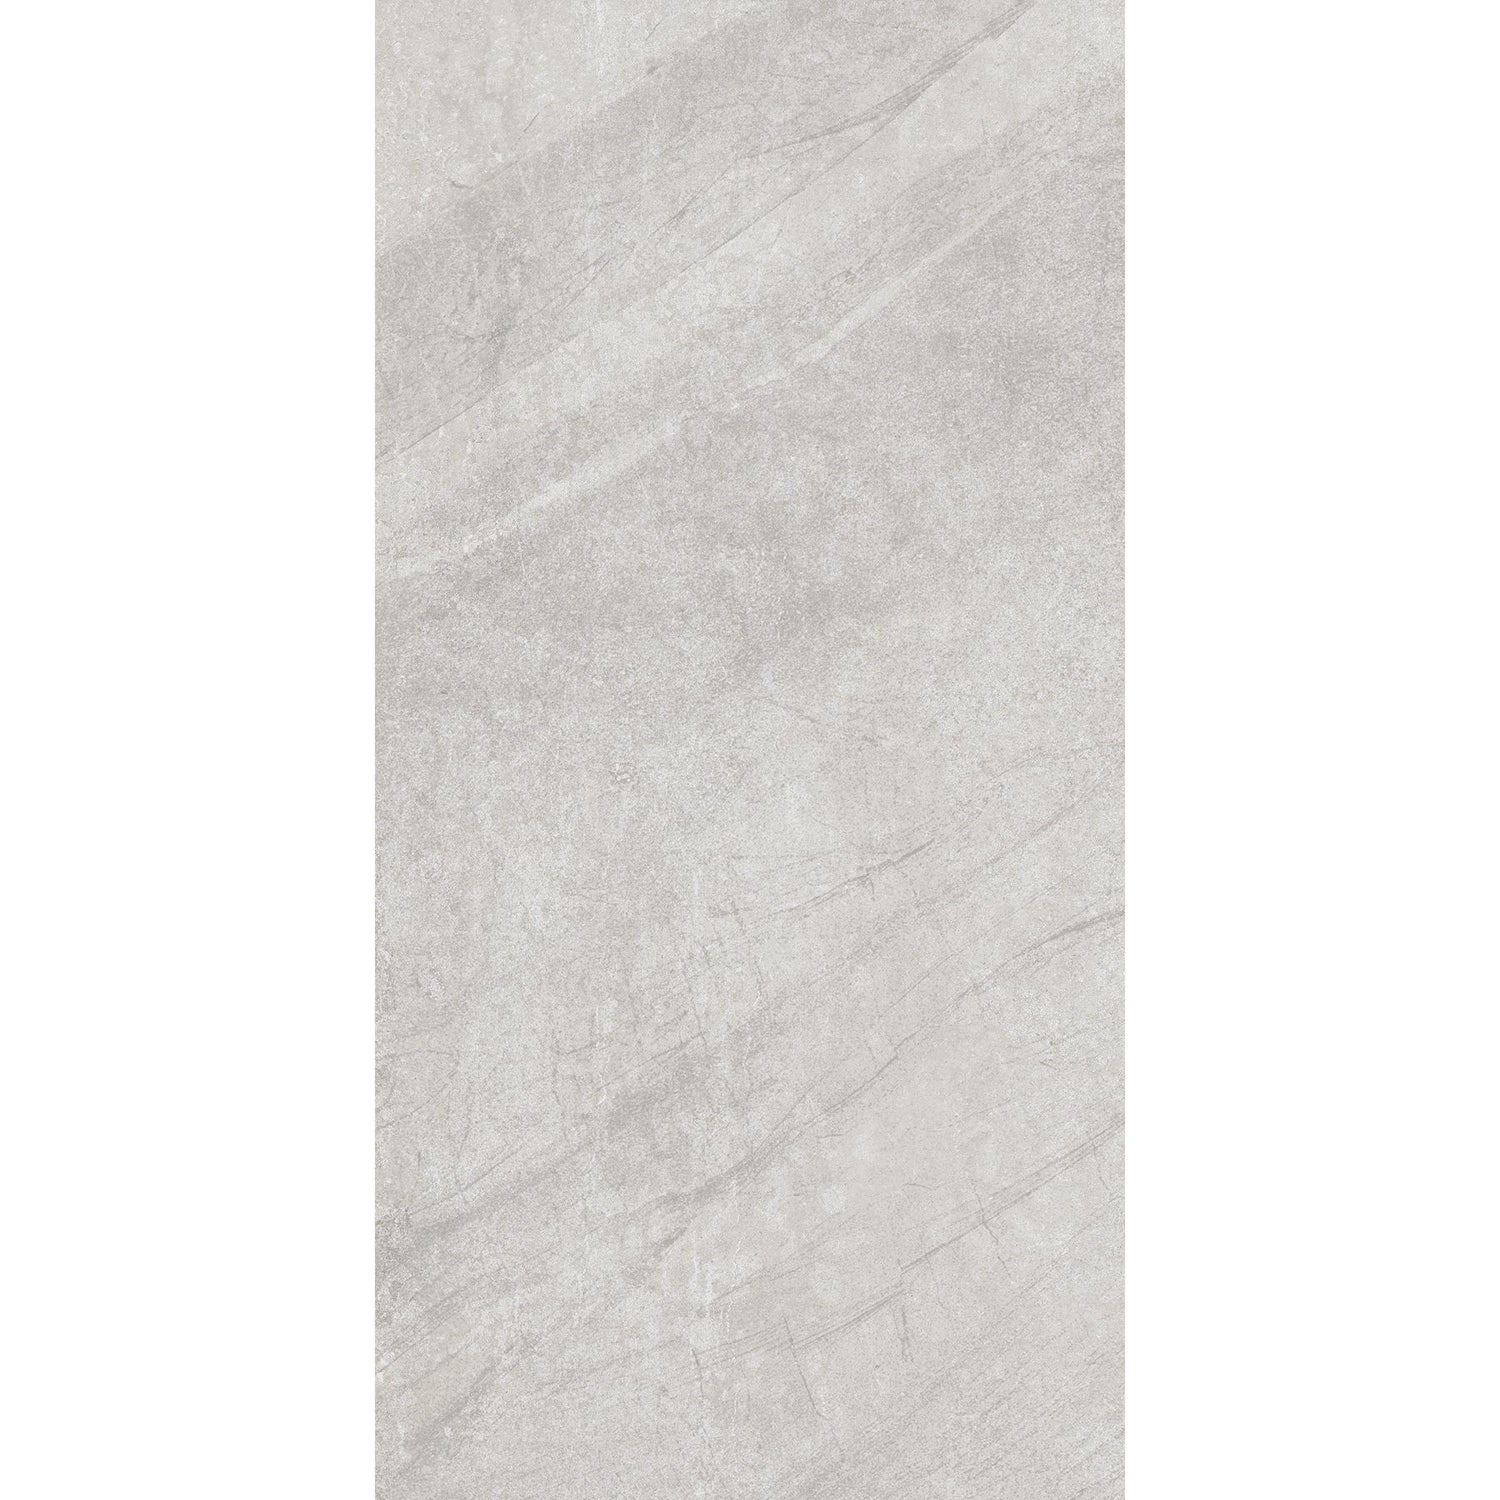 Cosmopol Beige Ceramic Wall Tile - 30 x 60cm